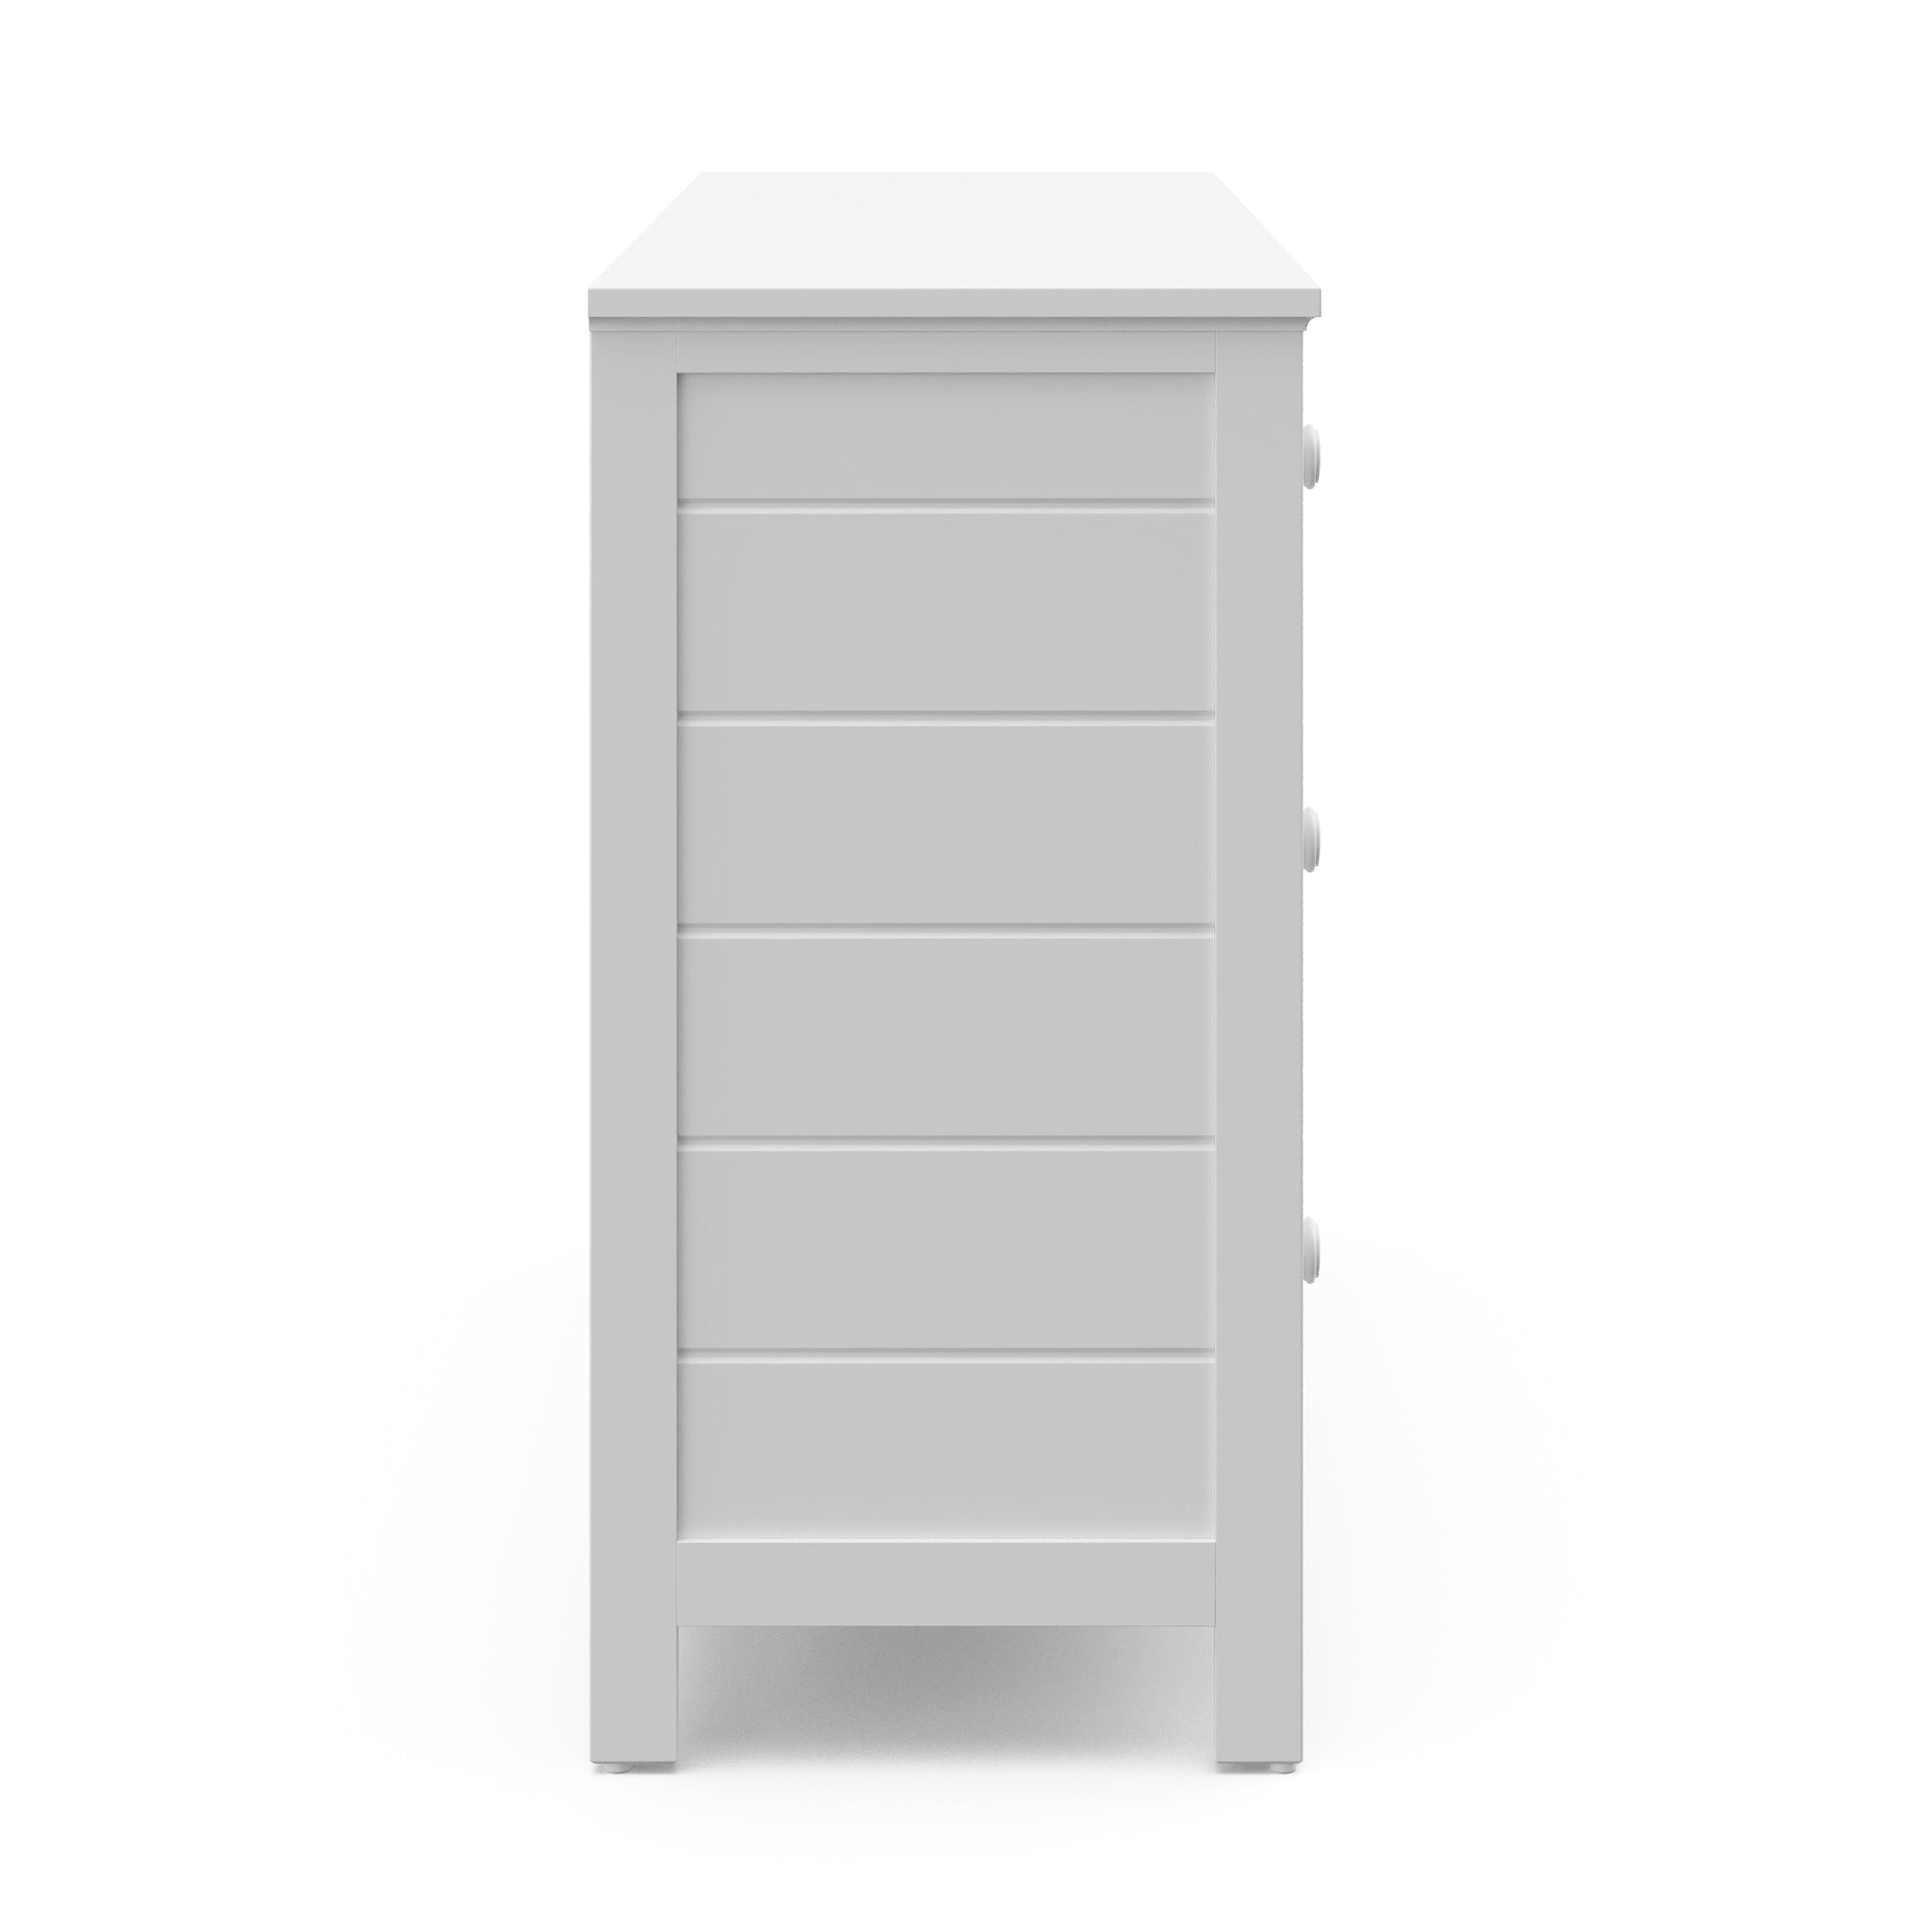 Side view of white 6 drawer dresser